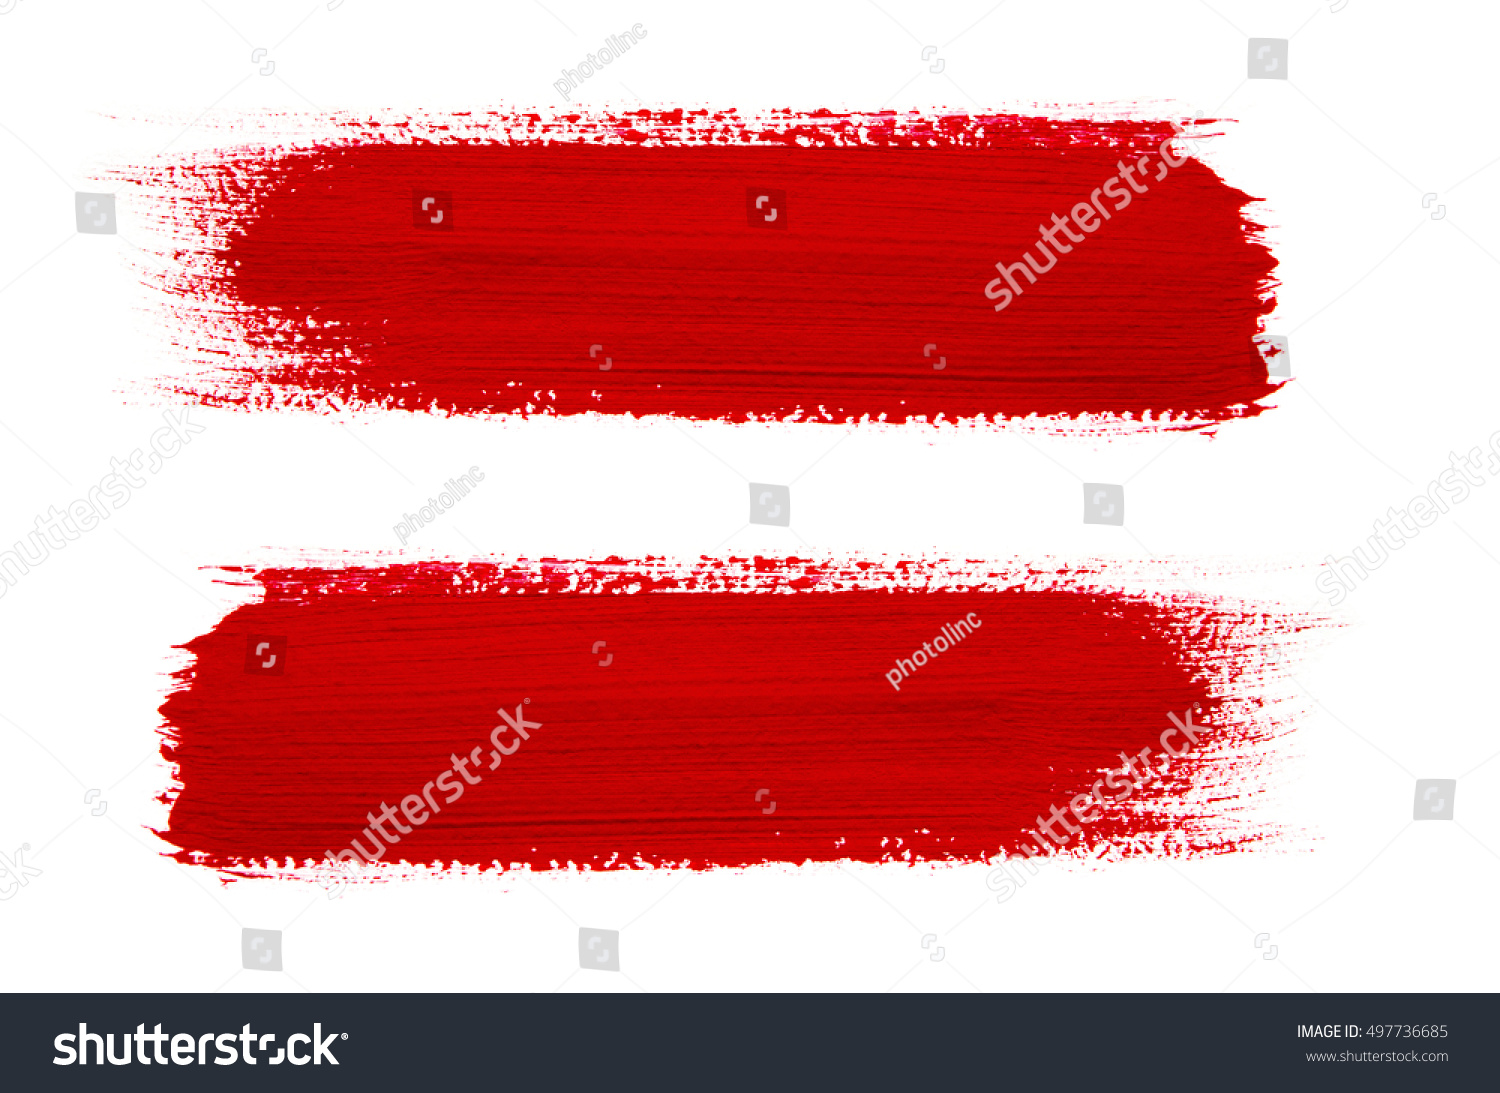 Red brush stroke isolated on grunge background #497736685